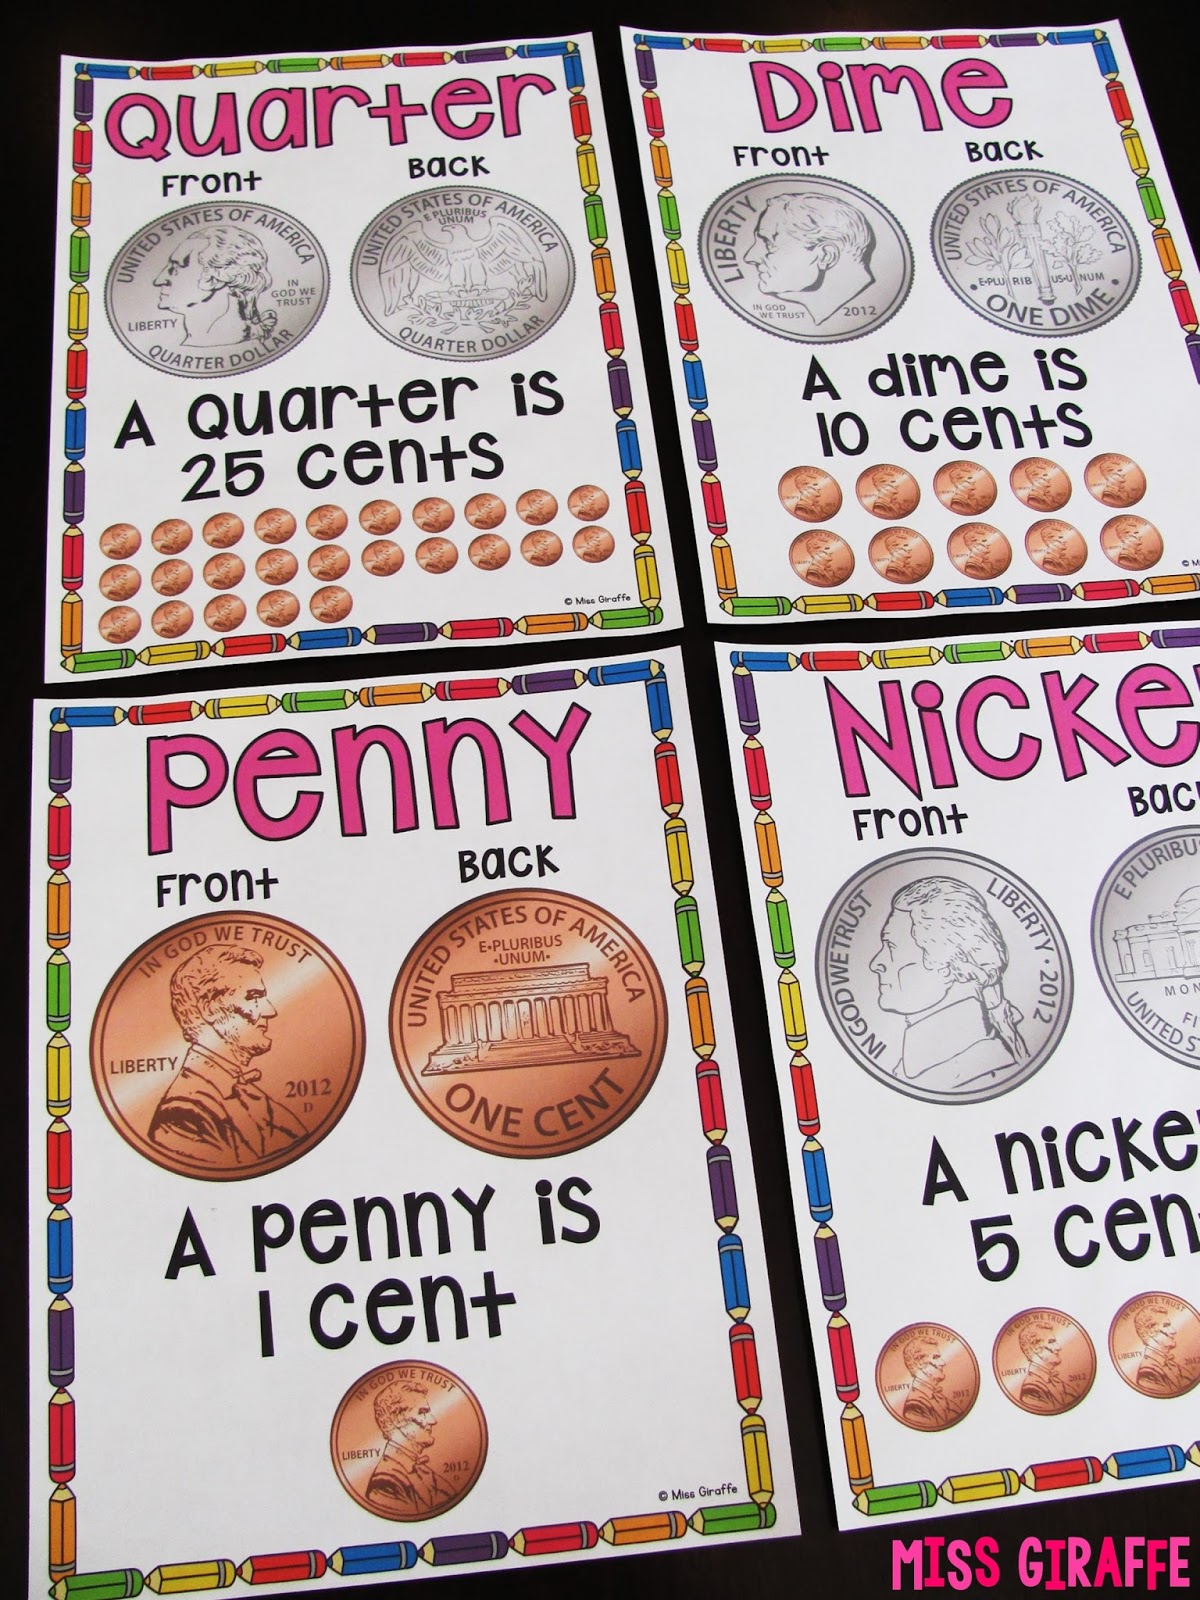 Coins Chart For Kindergarten